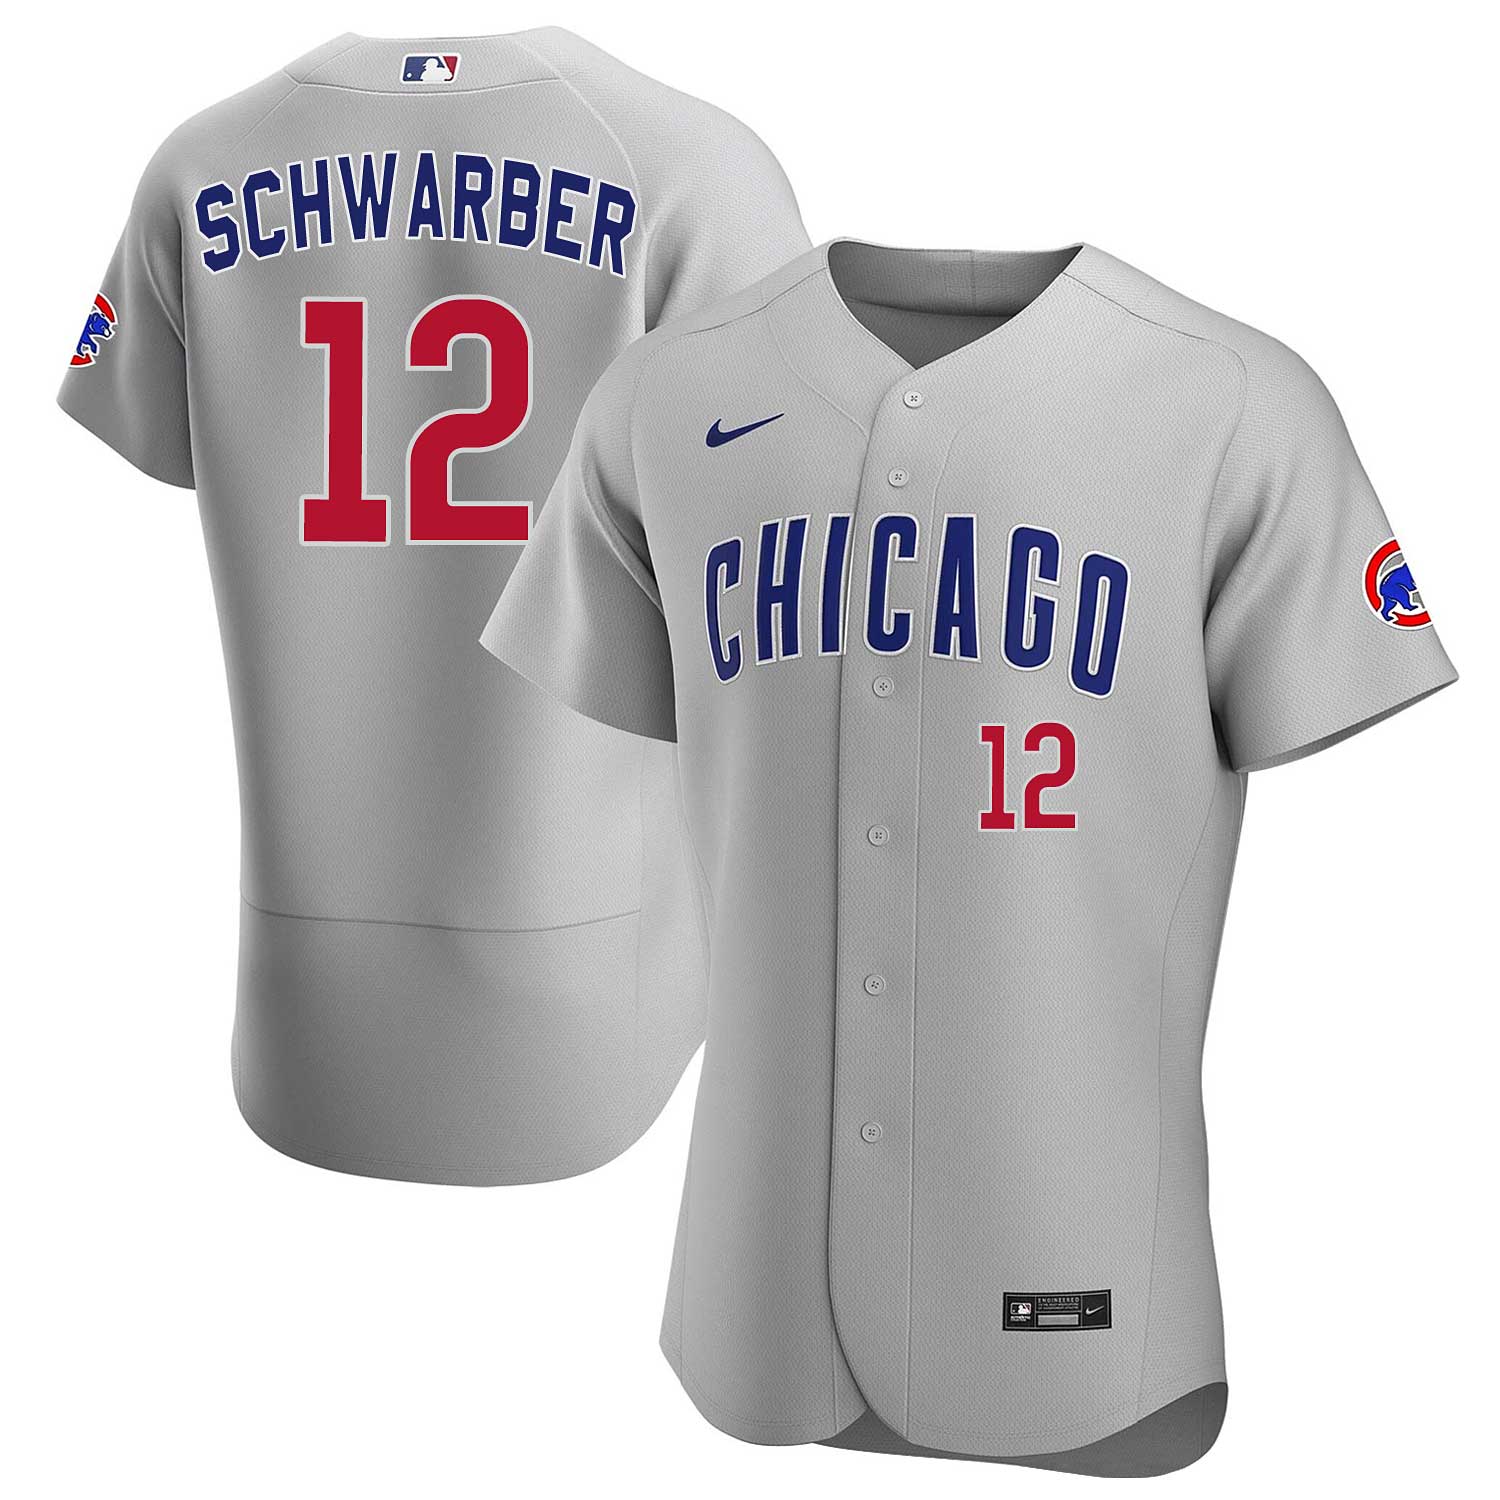 Kyle Schwarber Chicago Cubs Jersey Size XL 48 MLB